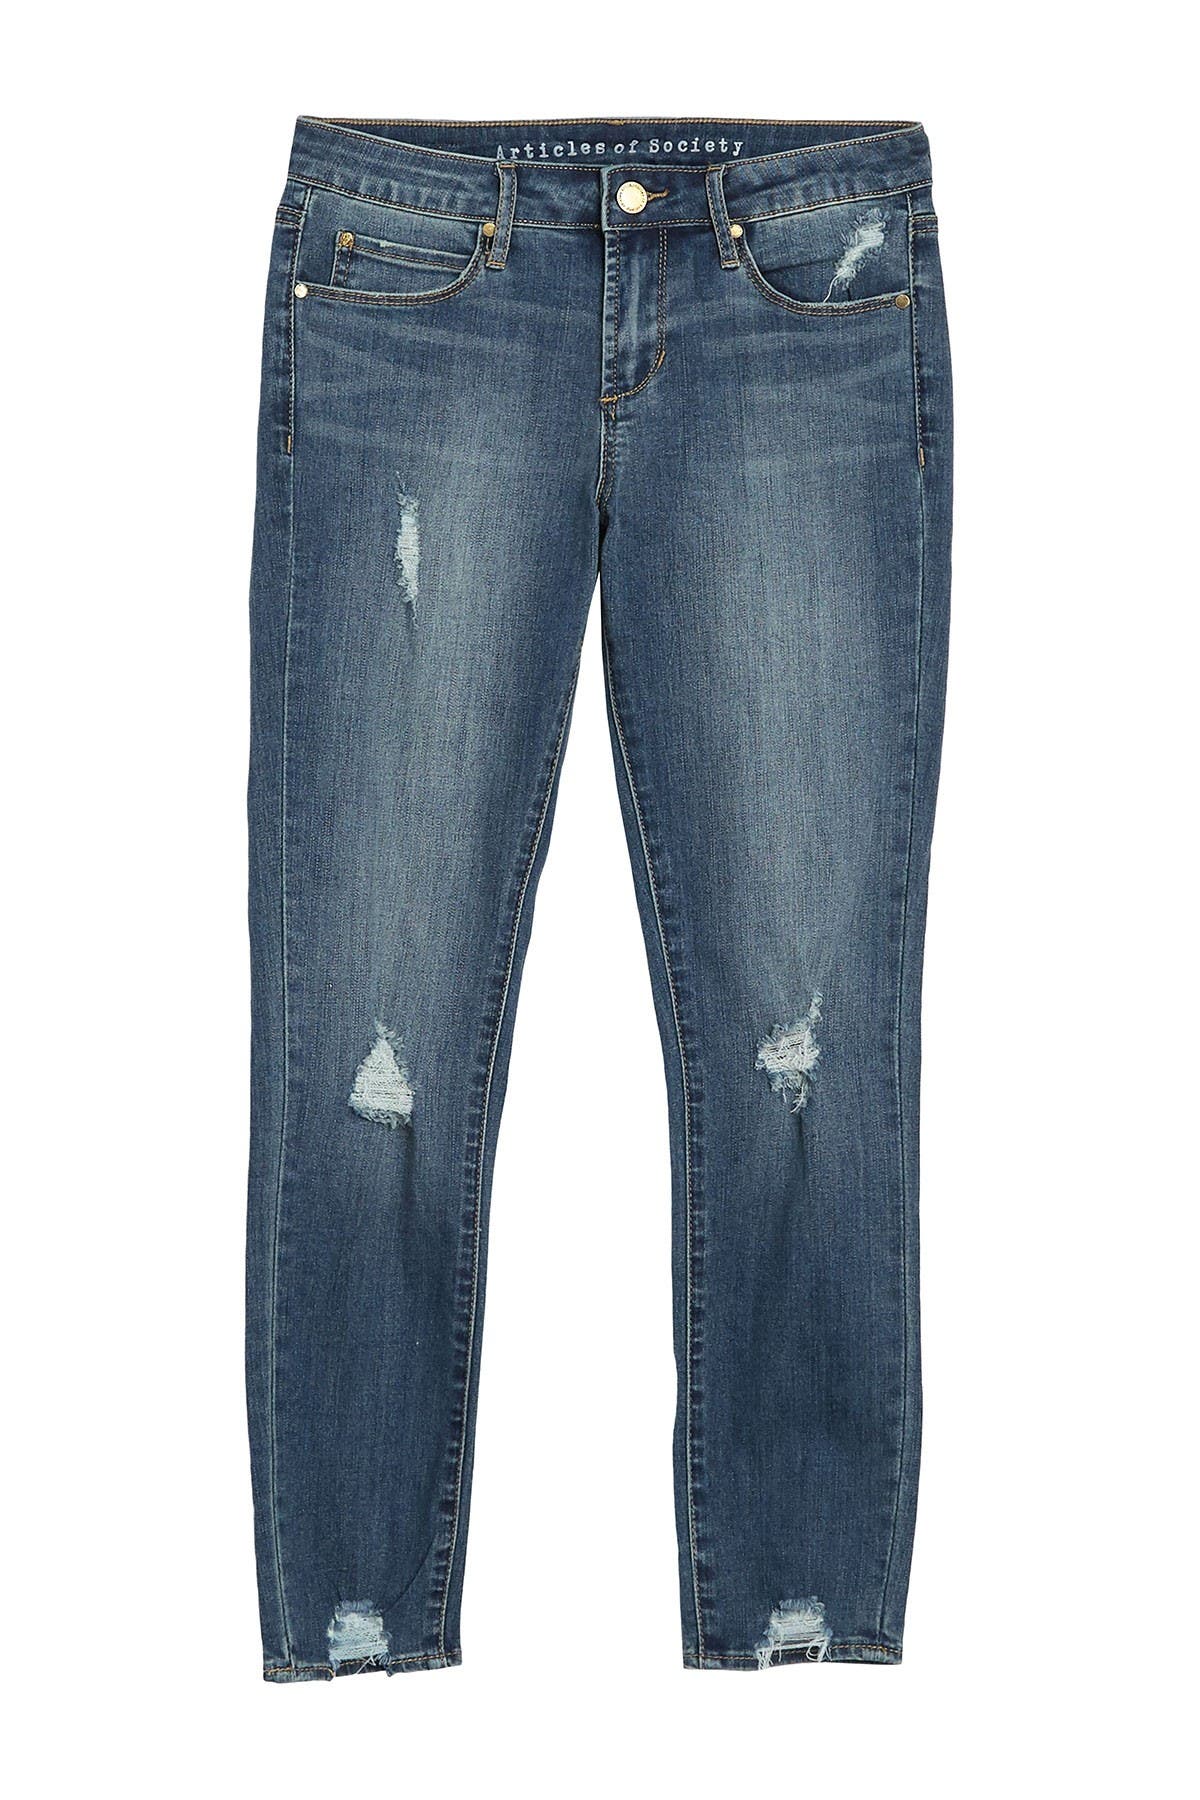 nordstrom rack distressed jeans